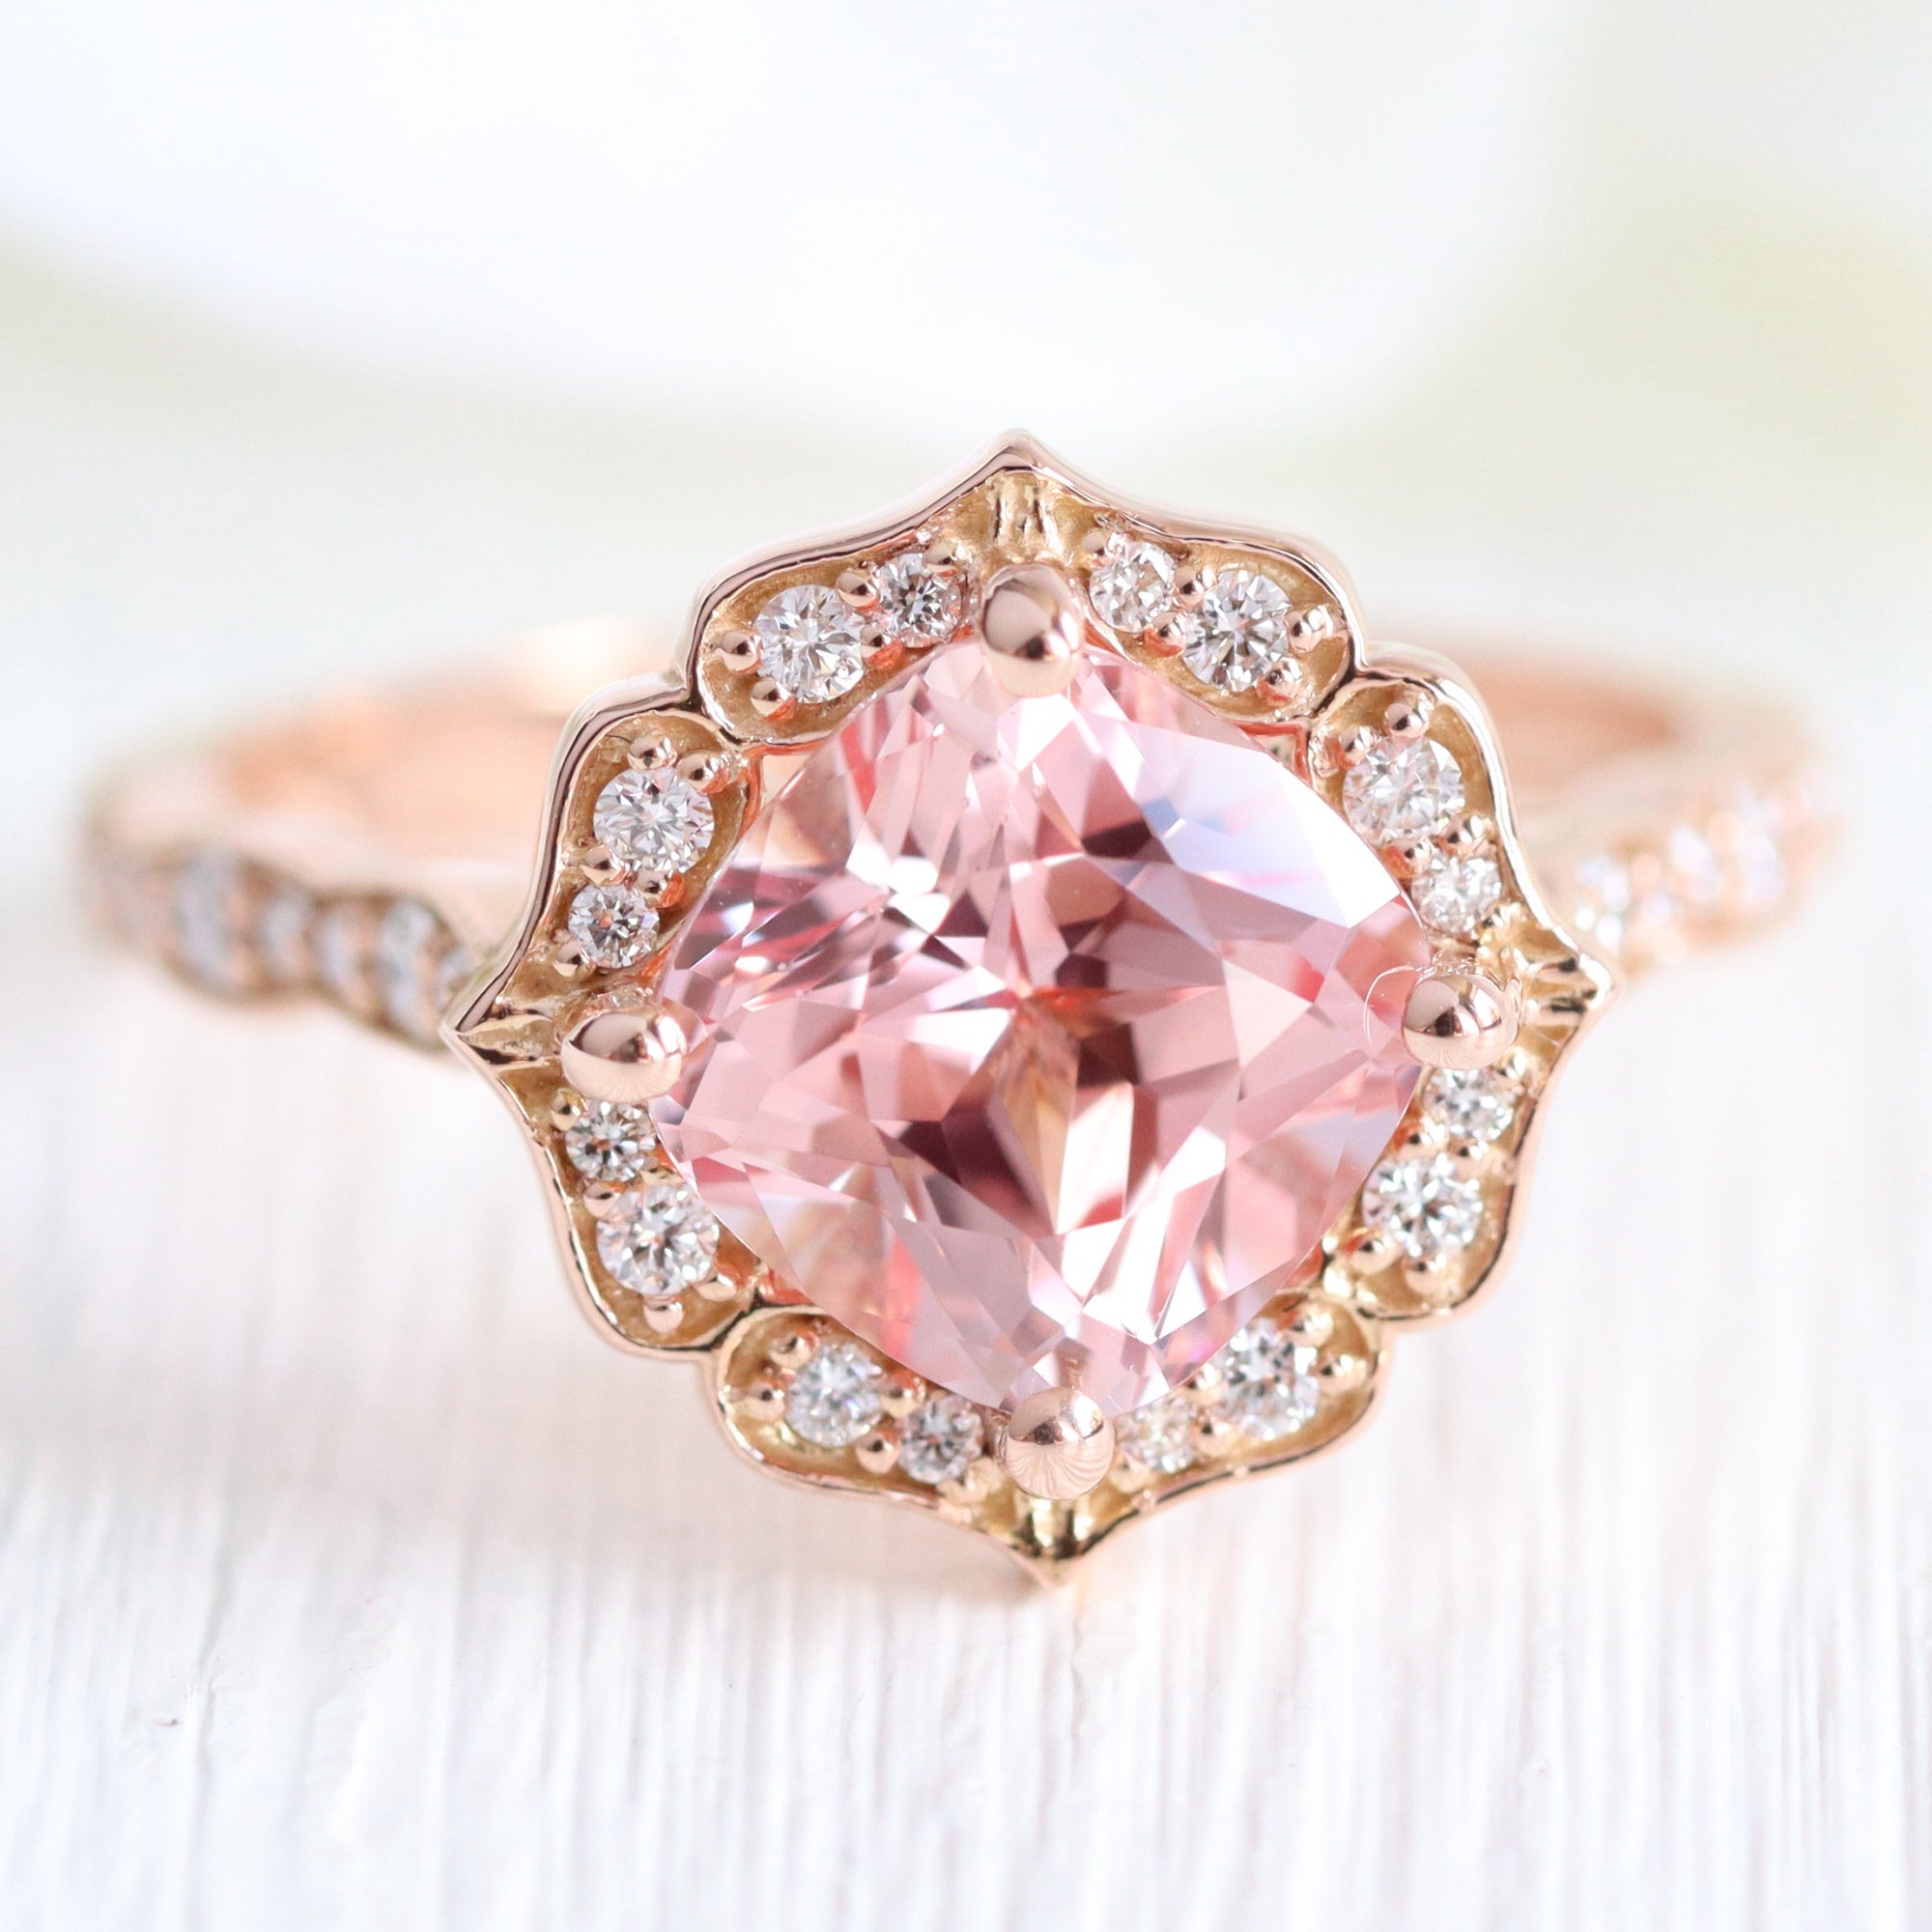 Large peach pink sapphire ring rose gold vintage halo diamond sapphire ring la more design jewelry